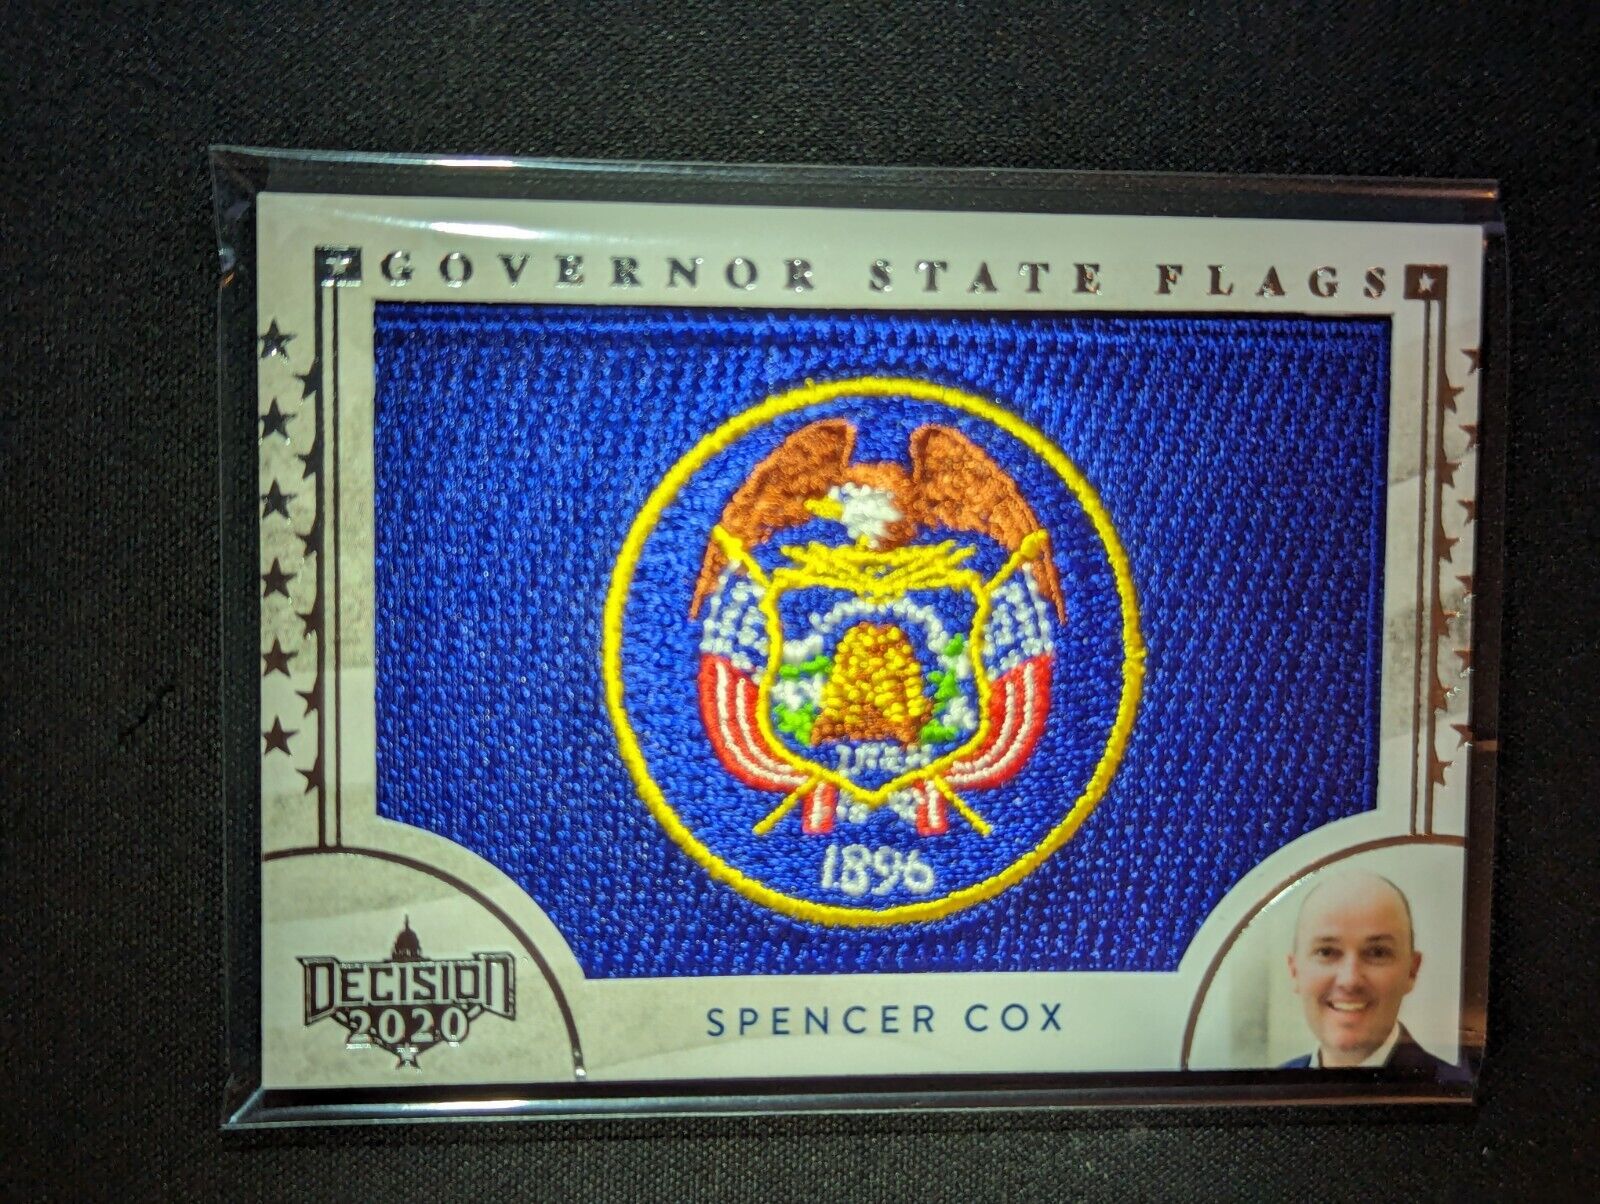 Spencer Cox 2024 Decision Governor State Flags Patch #GF7 Utah Governor